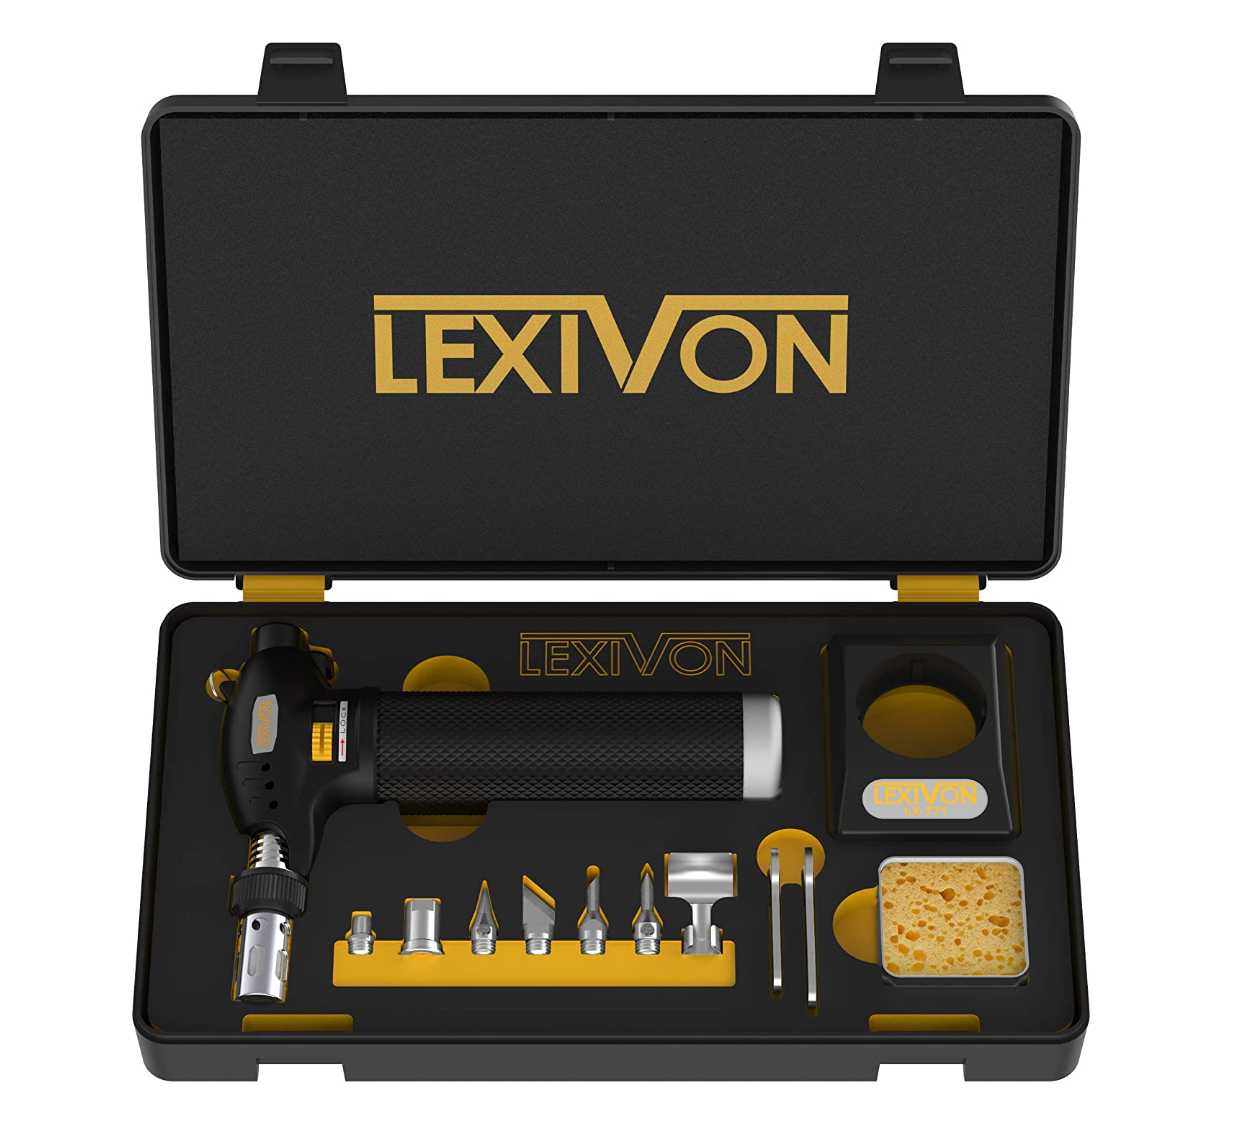 LEXIVON Butane Torch Multi-Function Kit | Soldering Station Review